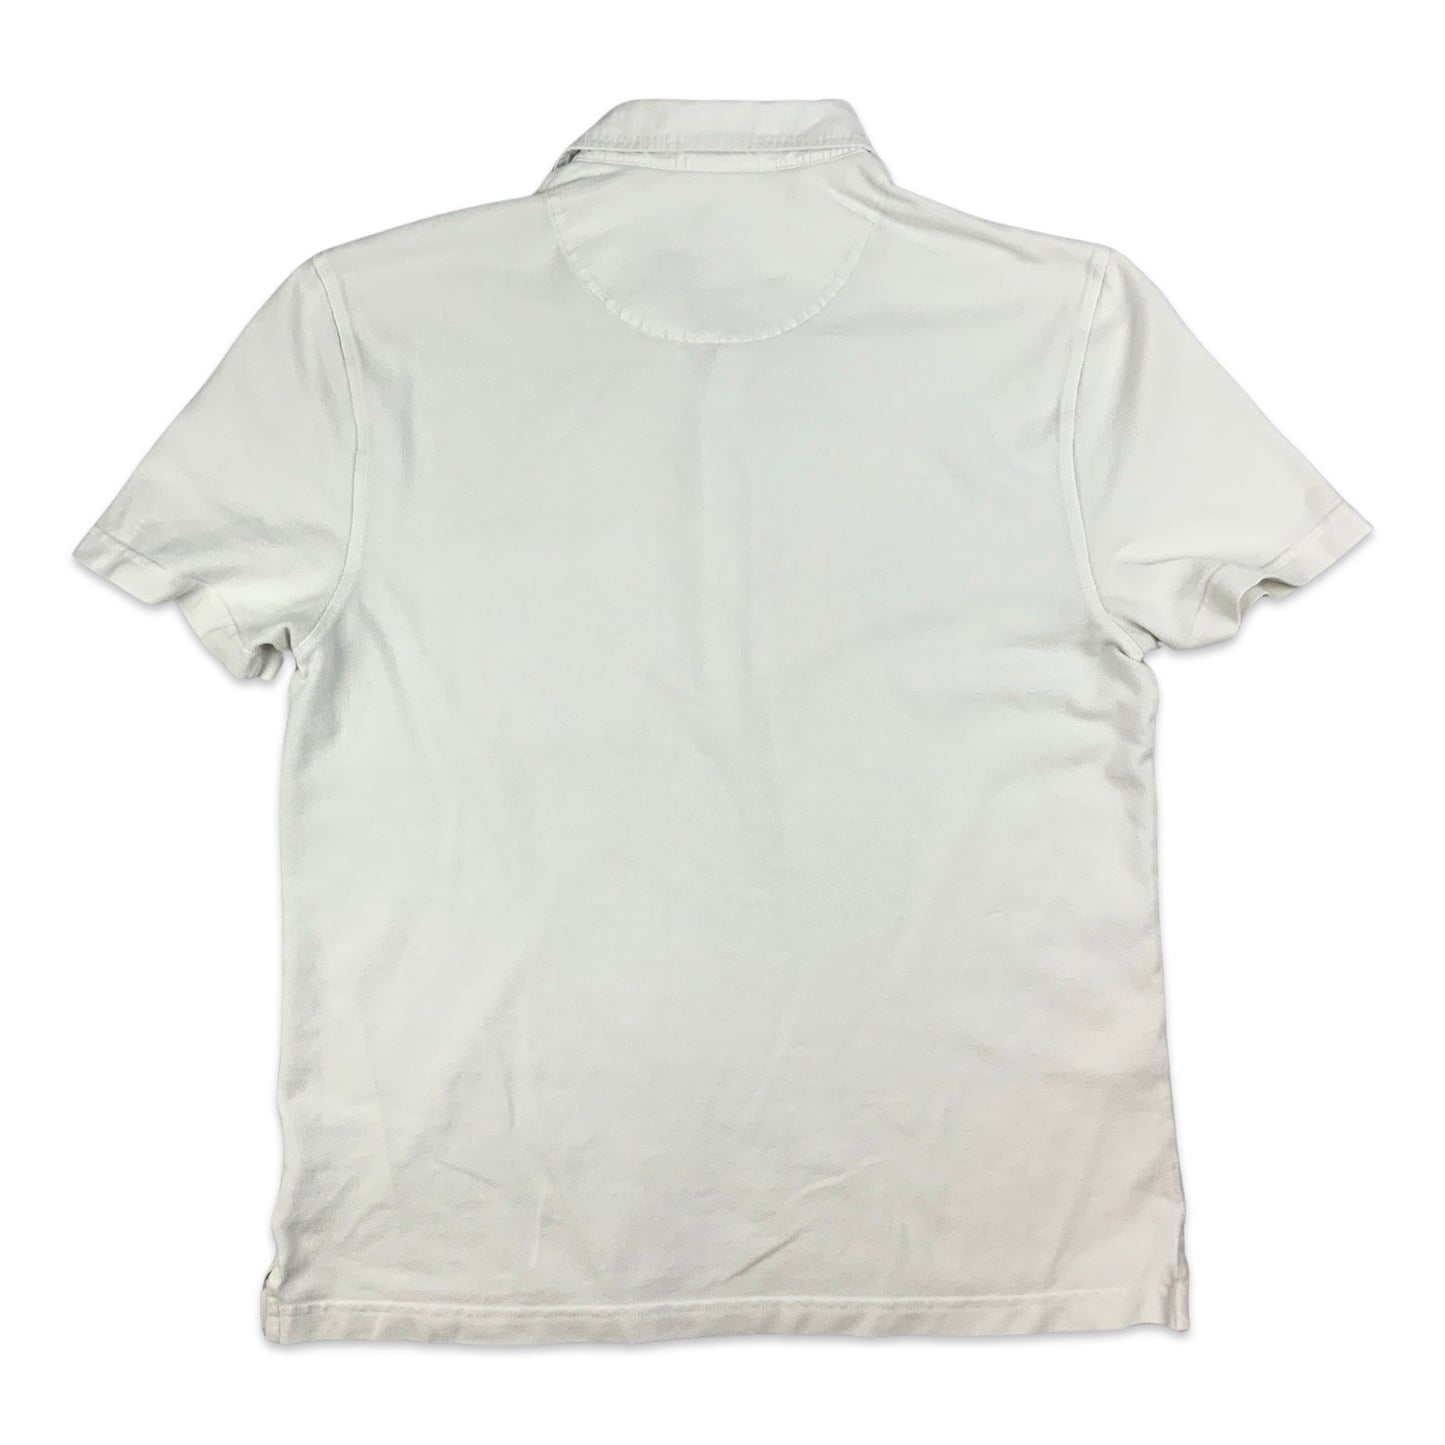 Lacoste White Polo Shirt S M